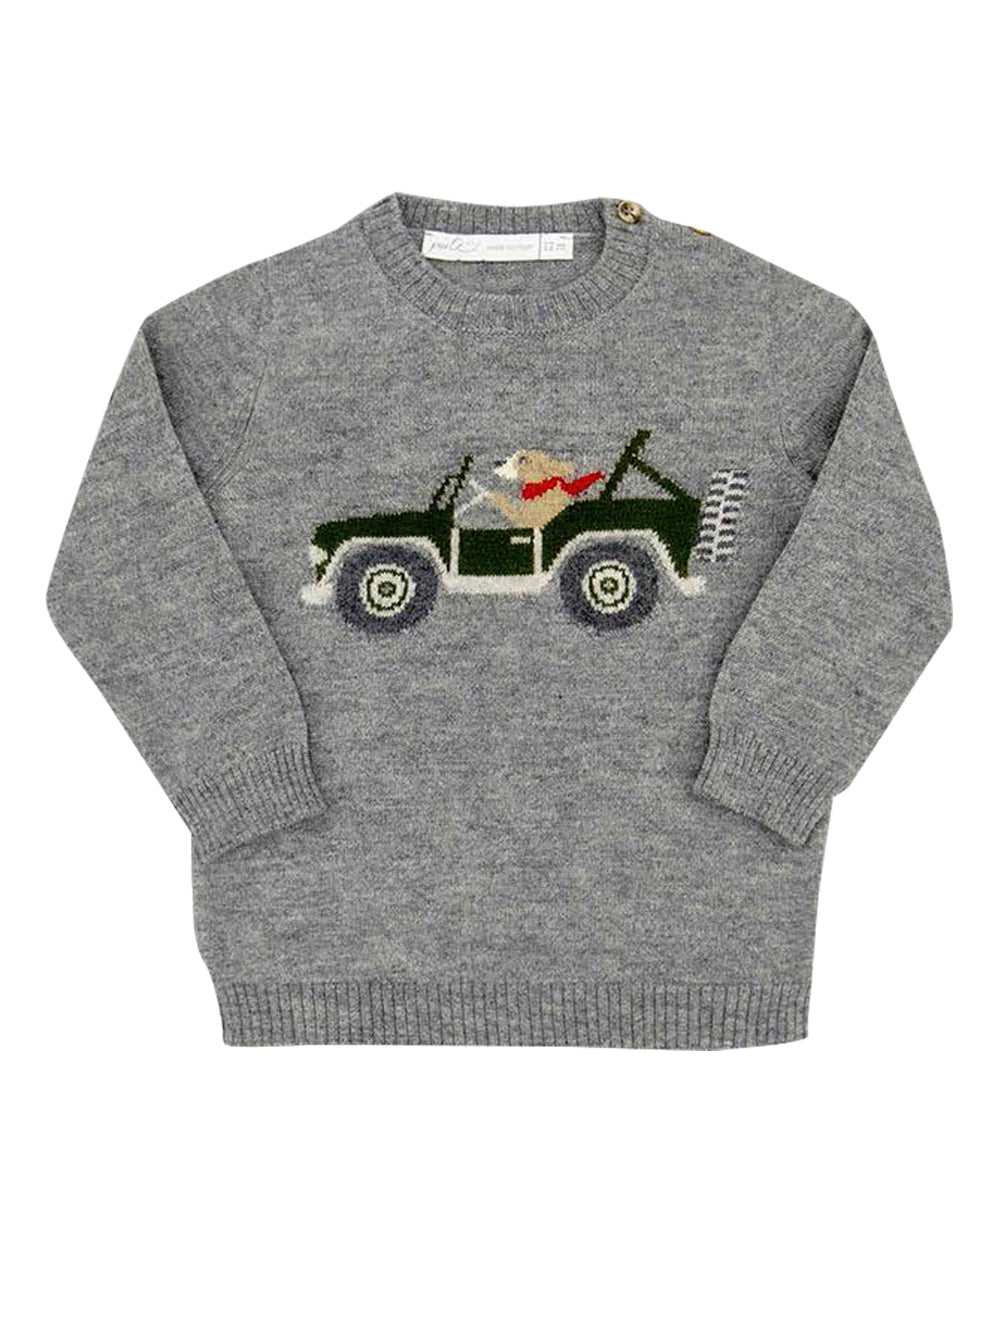 Vintage Car Sweater